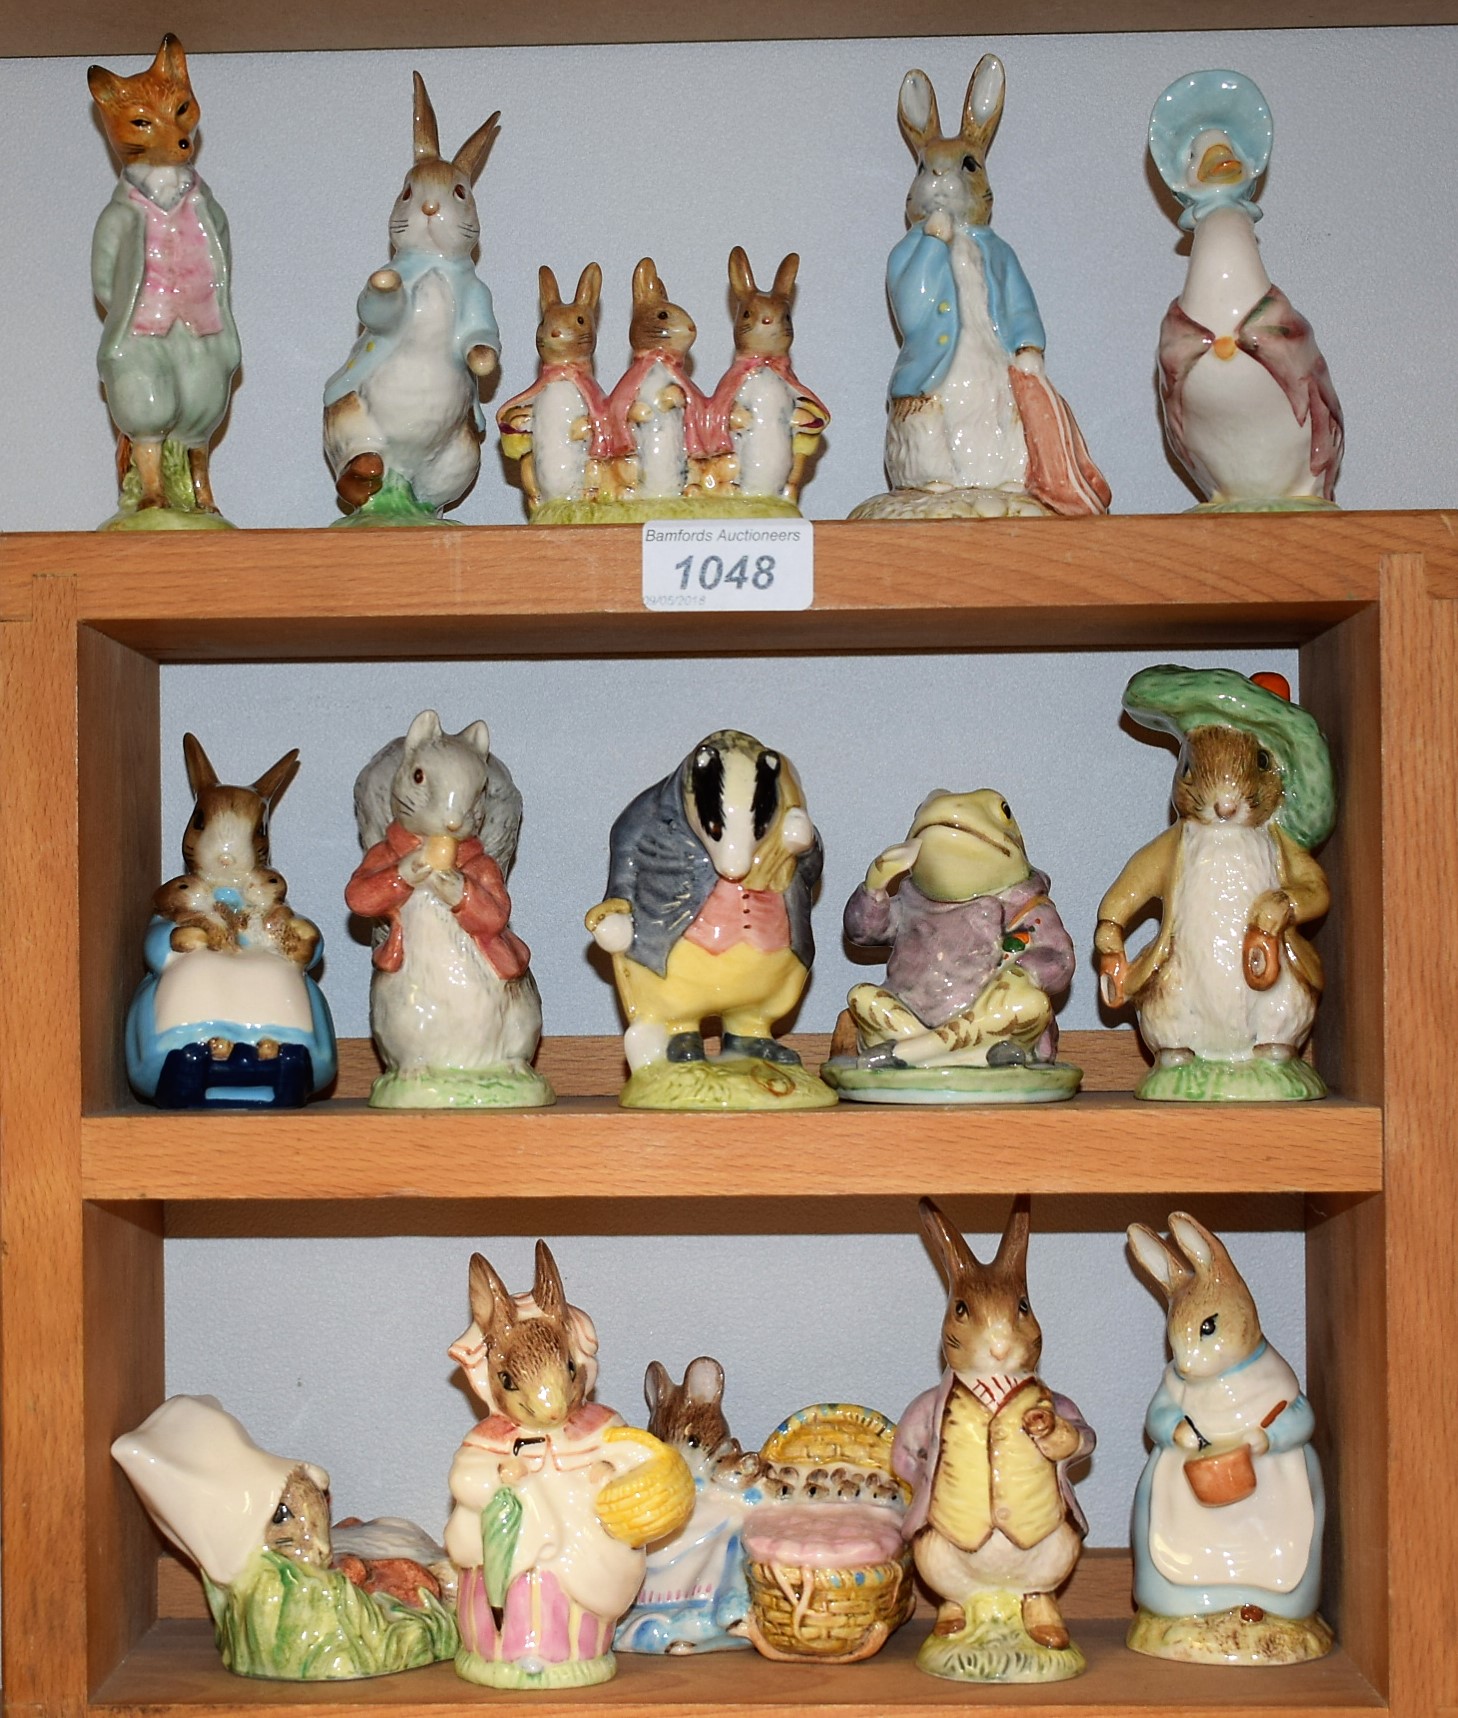 Royal Albert Beatrix Potter ceramic figures including Timmy Tiptoes, Jeremy Fisher, Peter Rabbit,